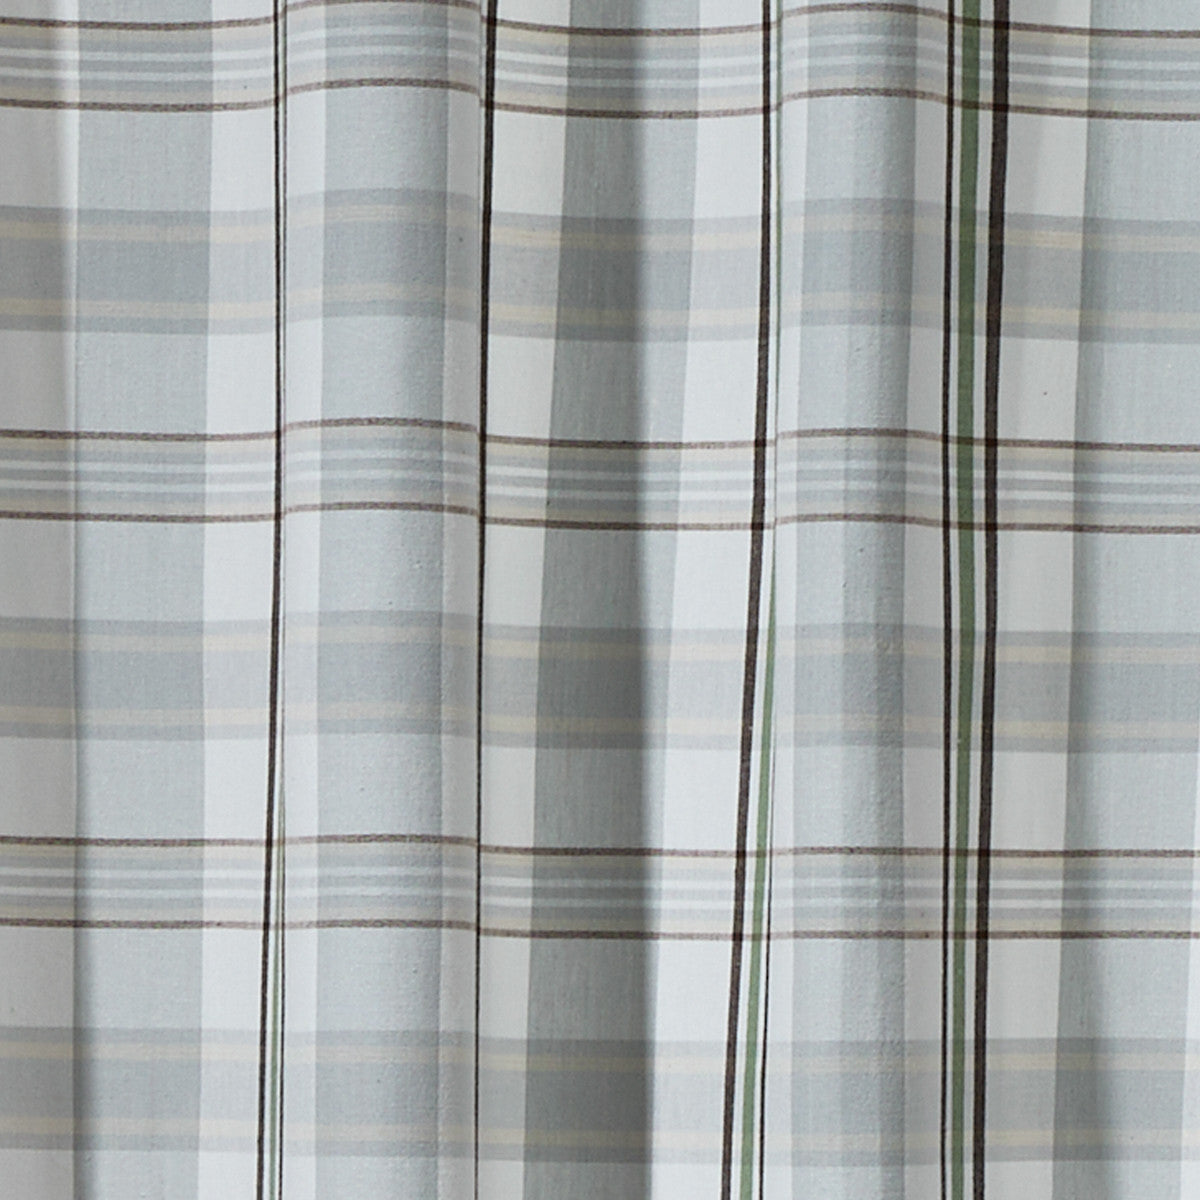 Ponderosa Pine Bordered Shower Curtain 72" X 72" Set of 2 - Park Designs